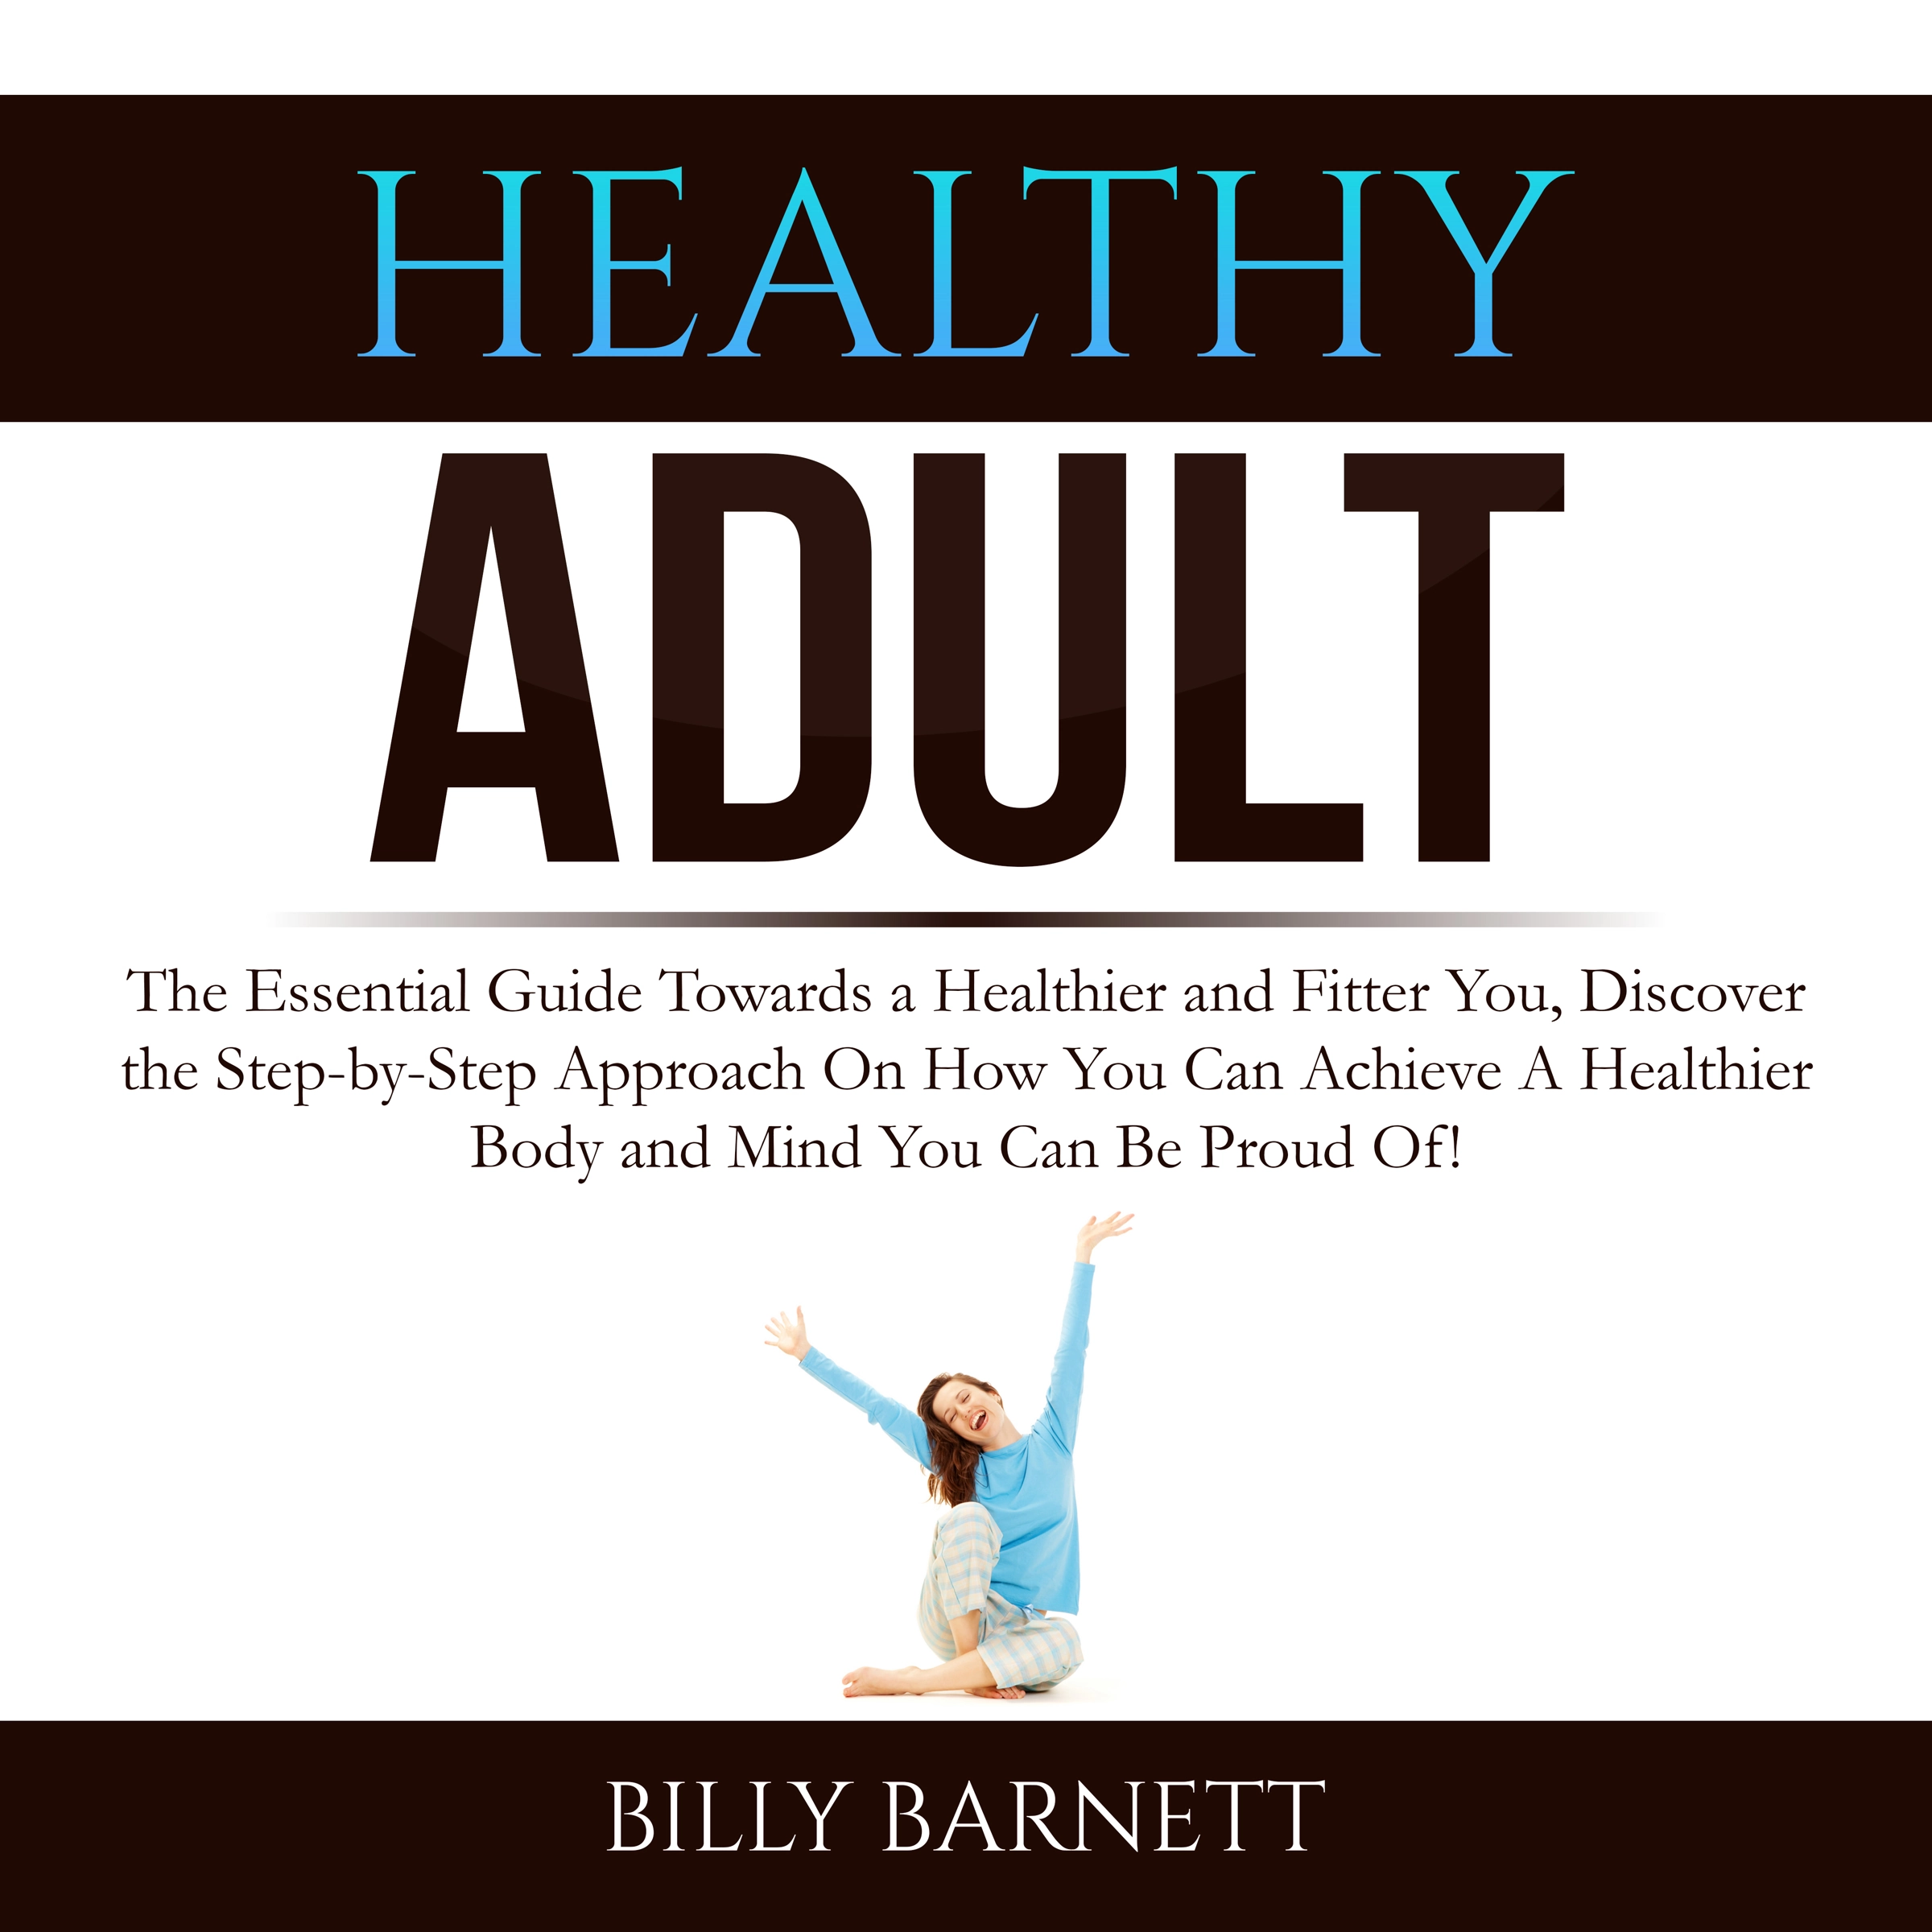 Healthy Adult Audiobook by Billy Barnett